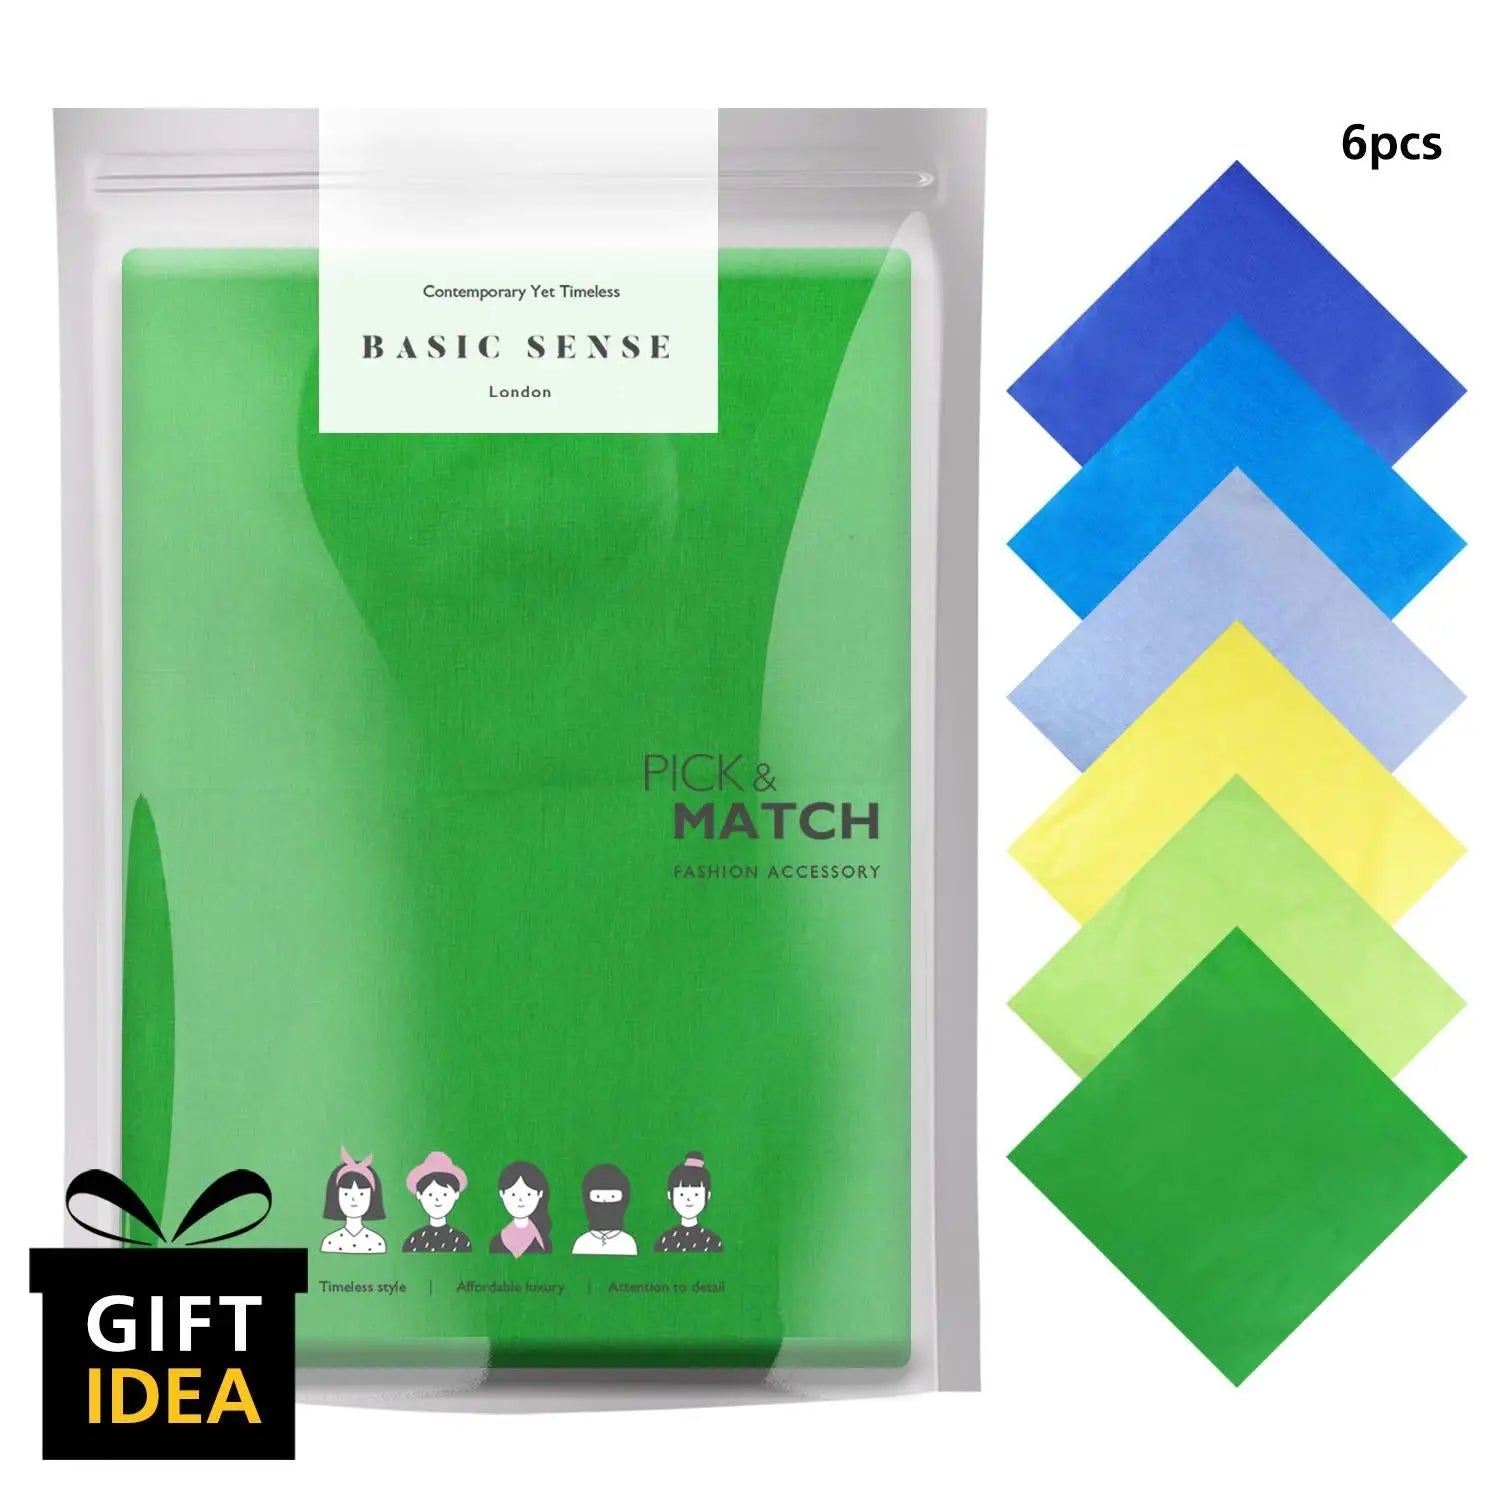 6pcs plain cotton bandana set with green tea bags